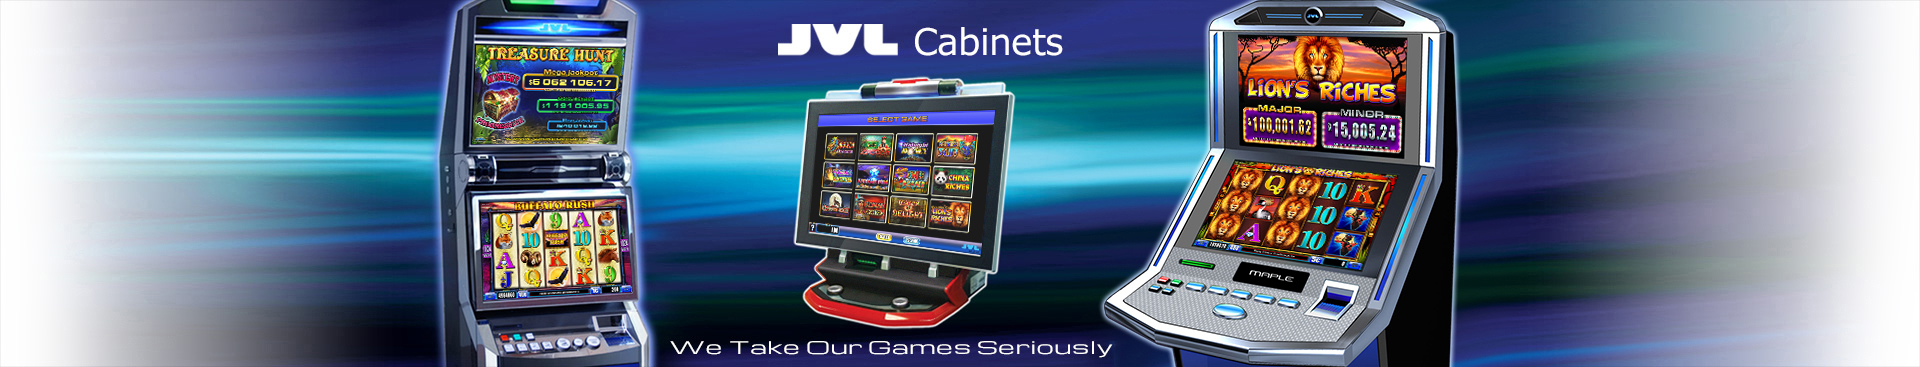 JVL Cabinets